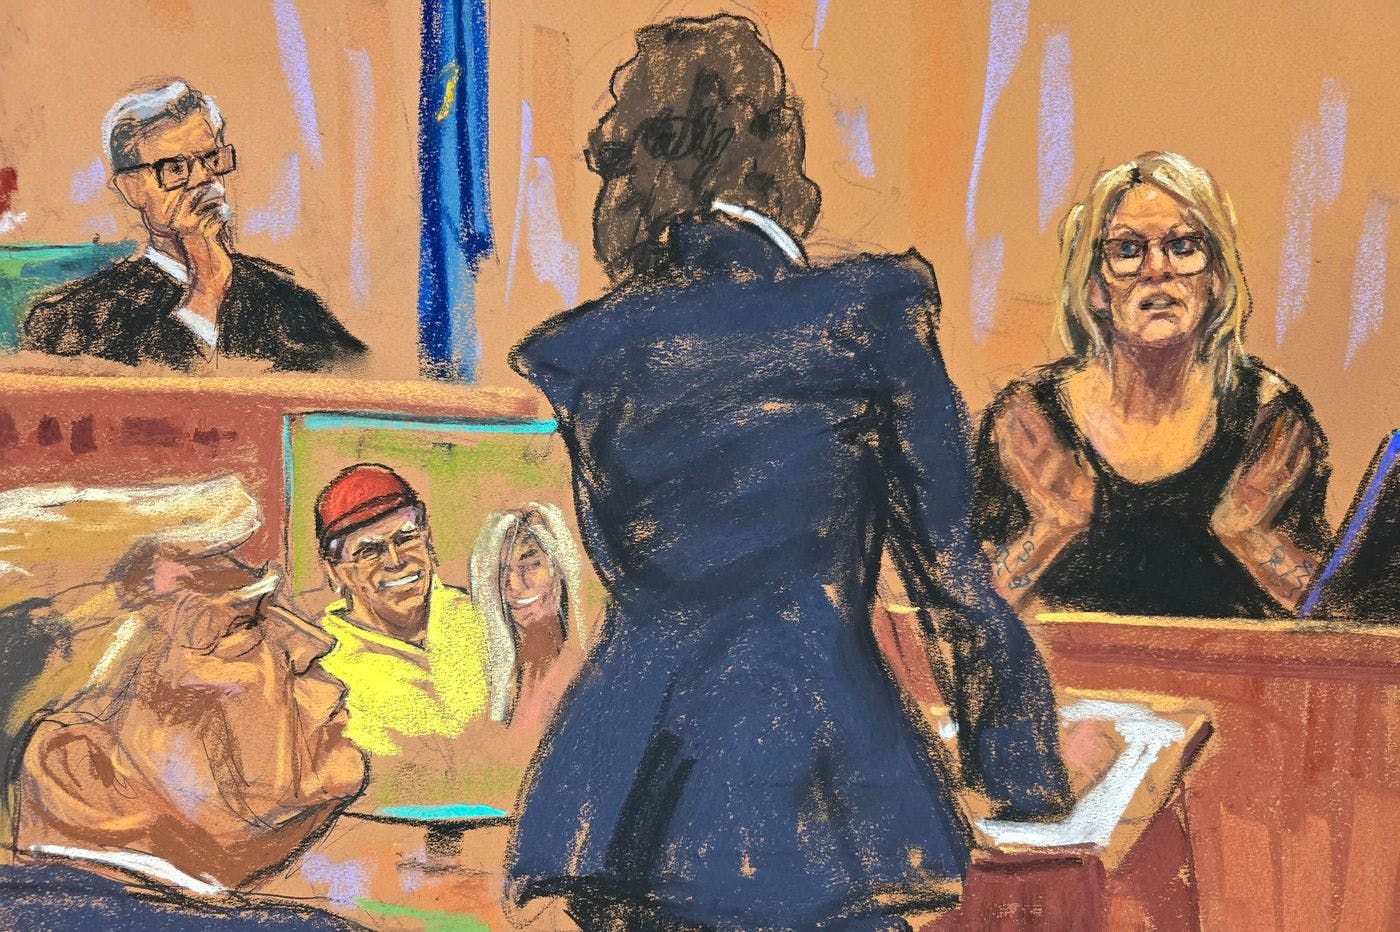 A courtroom sketch of Stormy Daniels' testimony